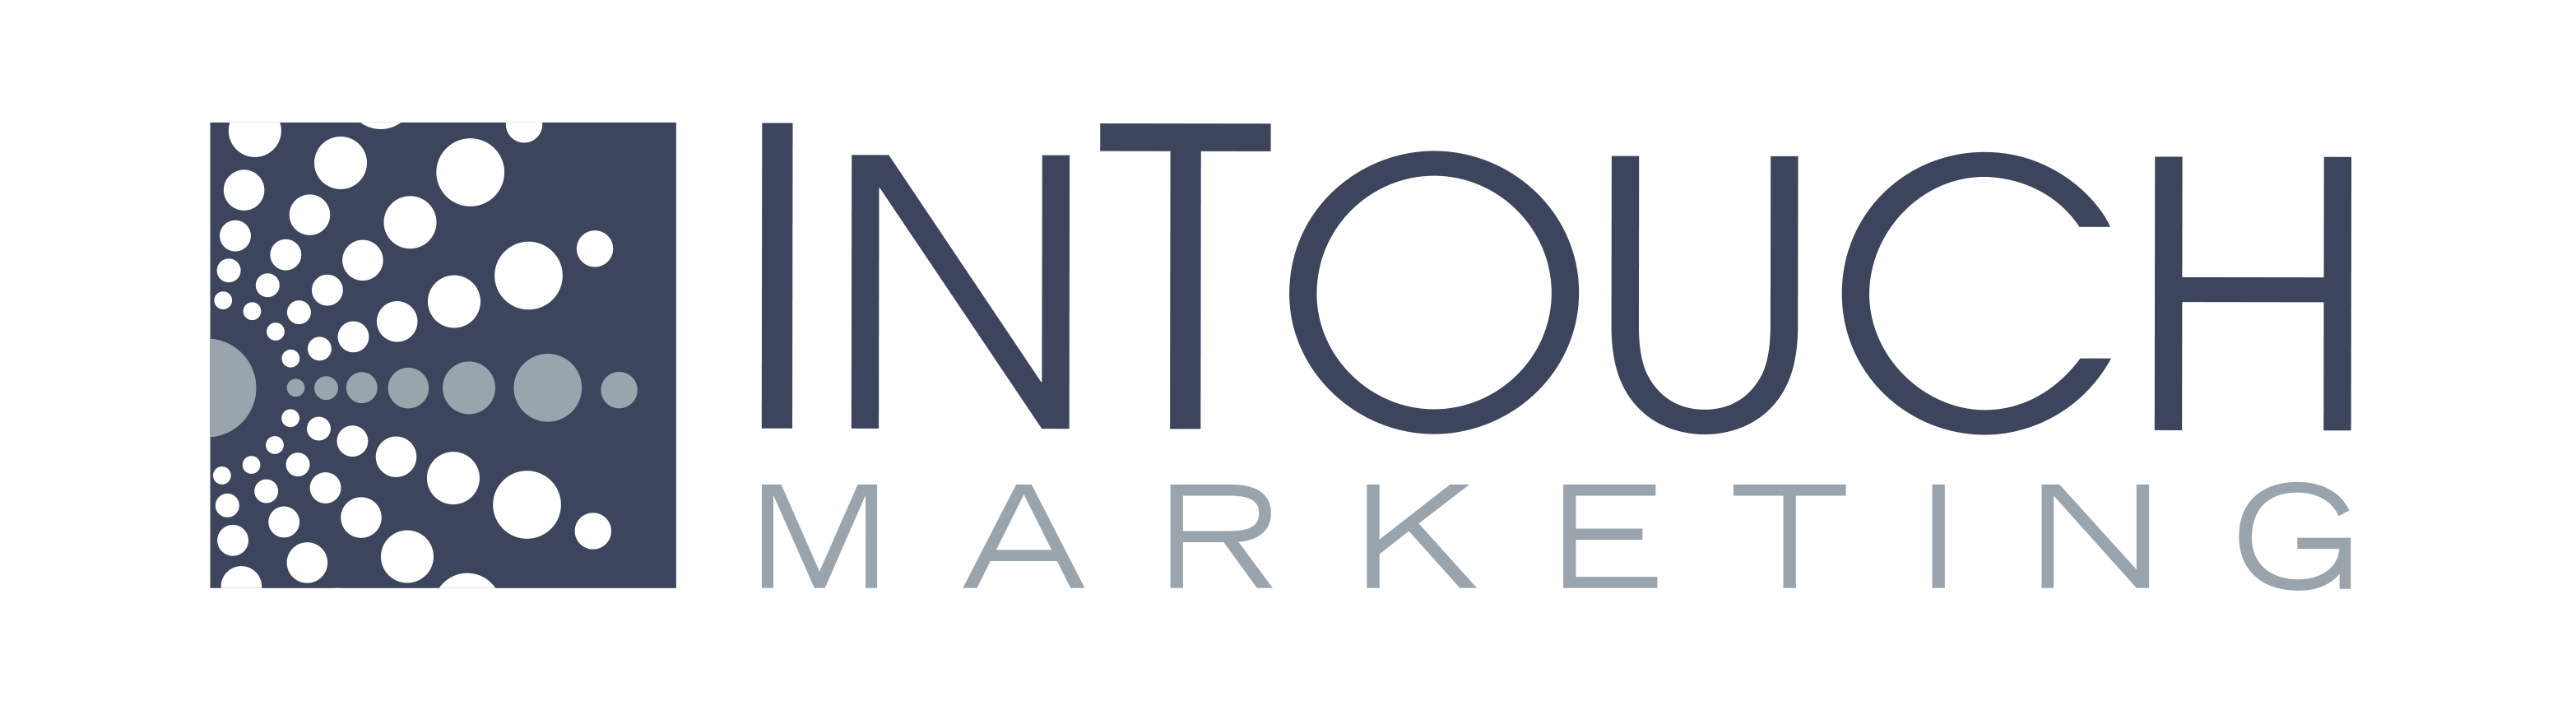 Intouch Logo - Inbound Marketing Agency | InTouch Marketing